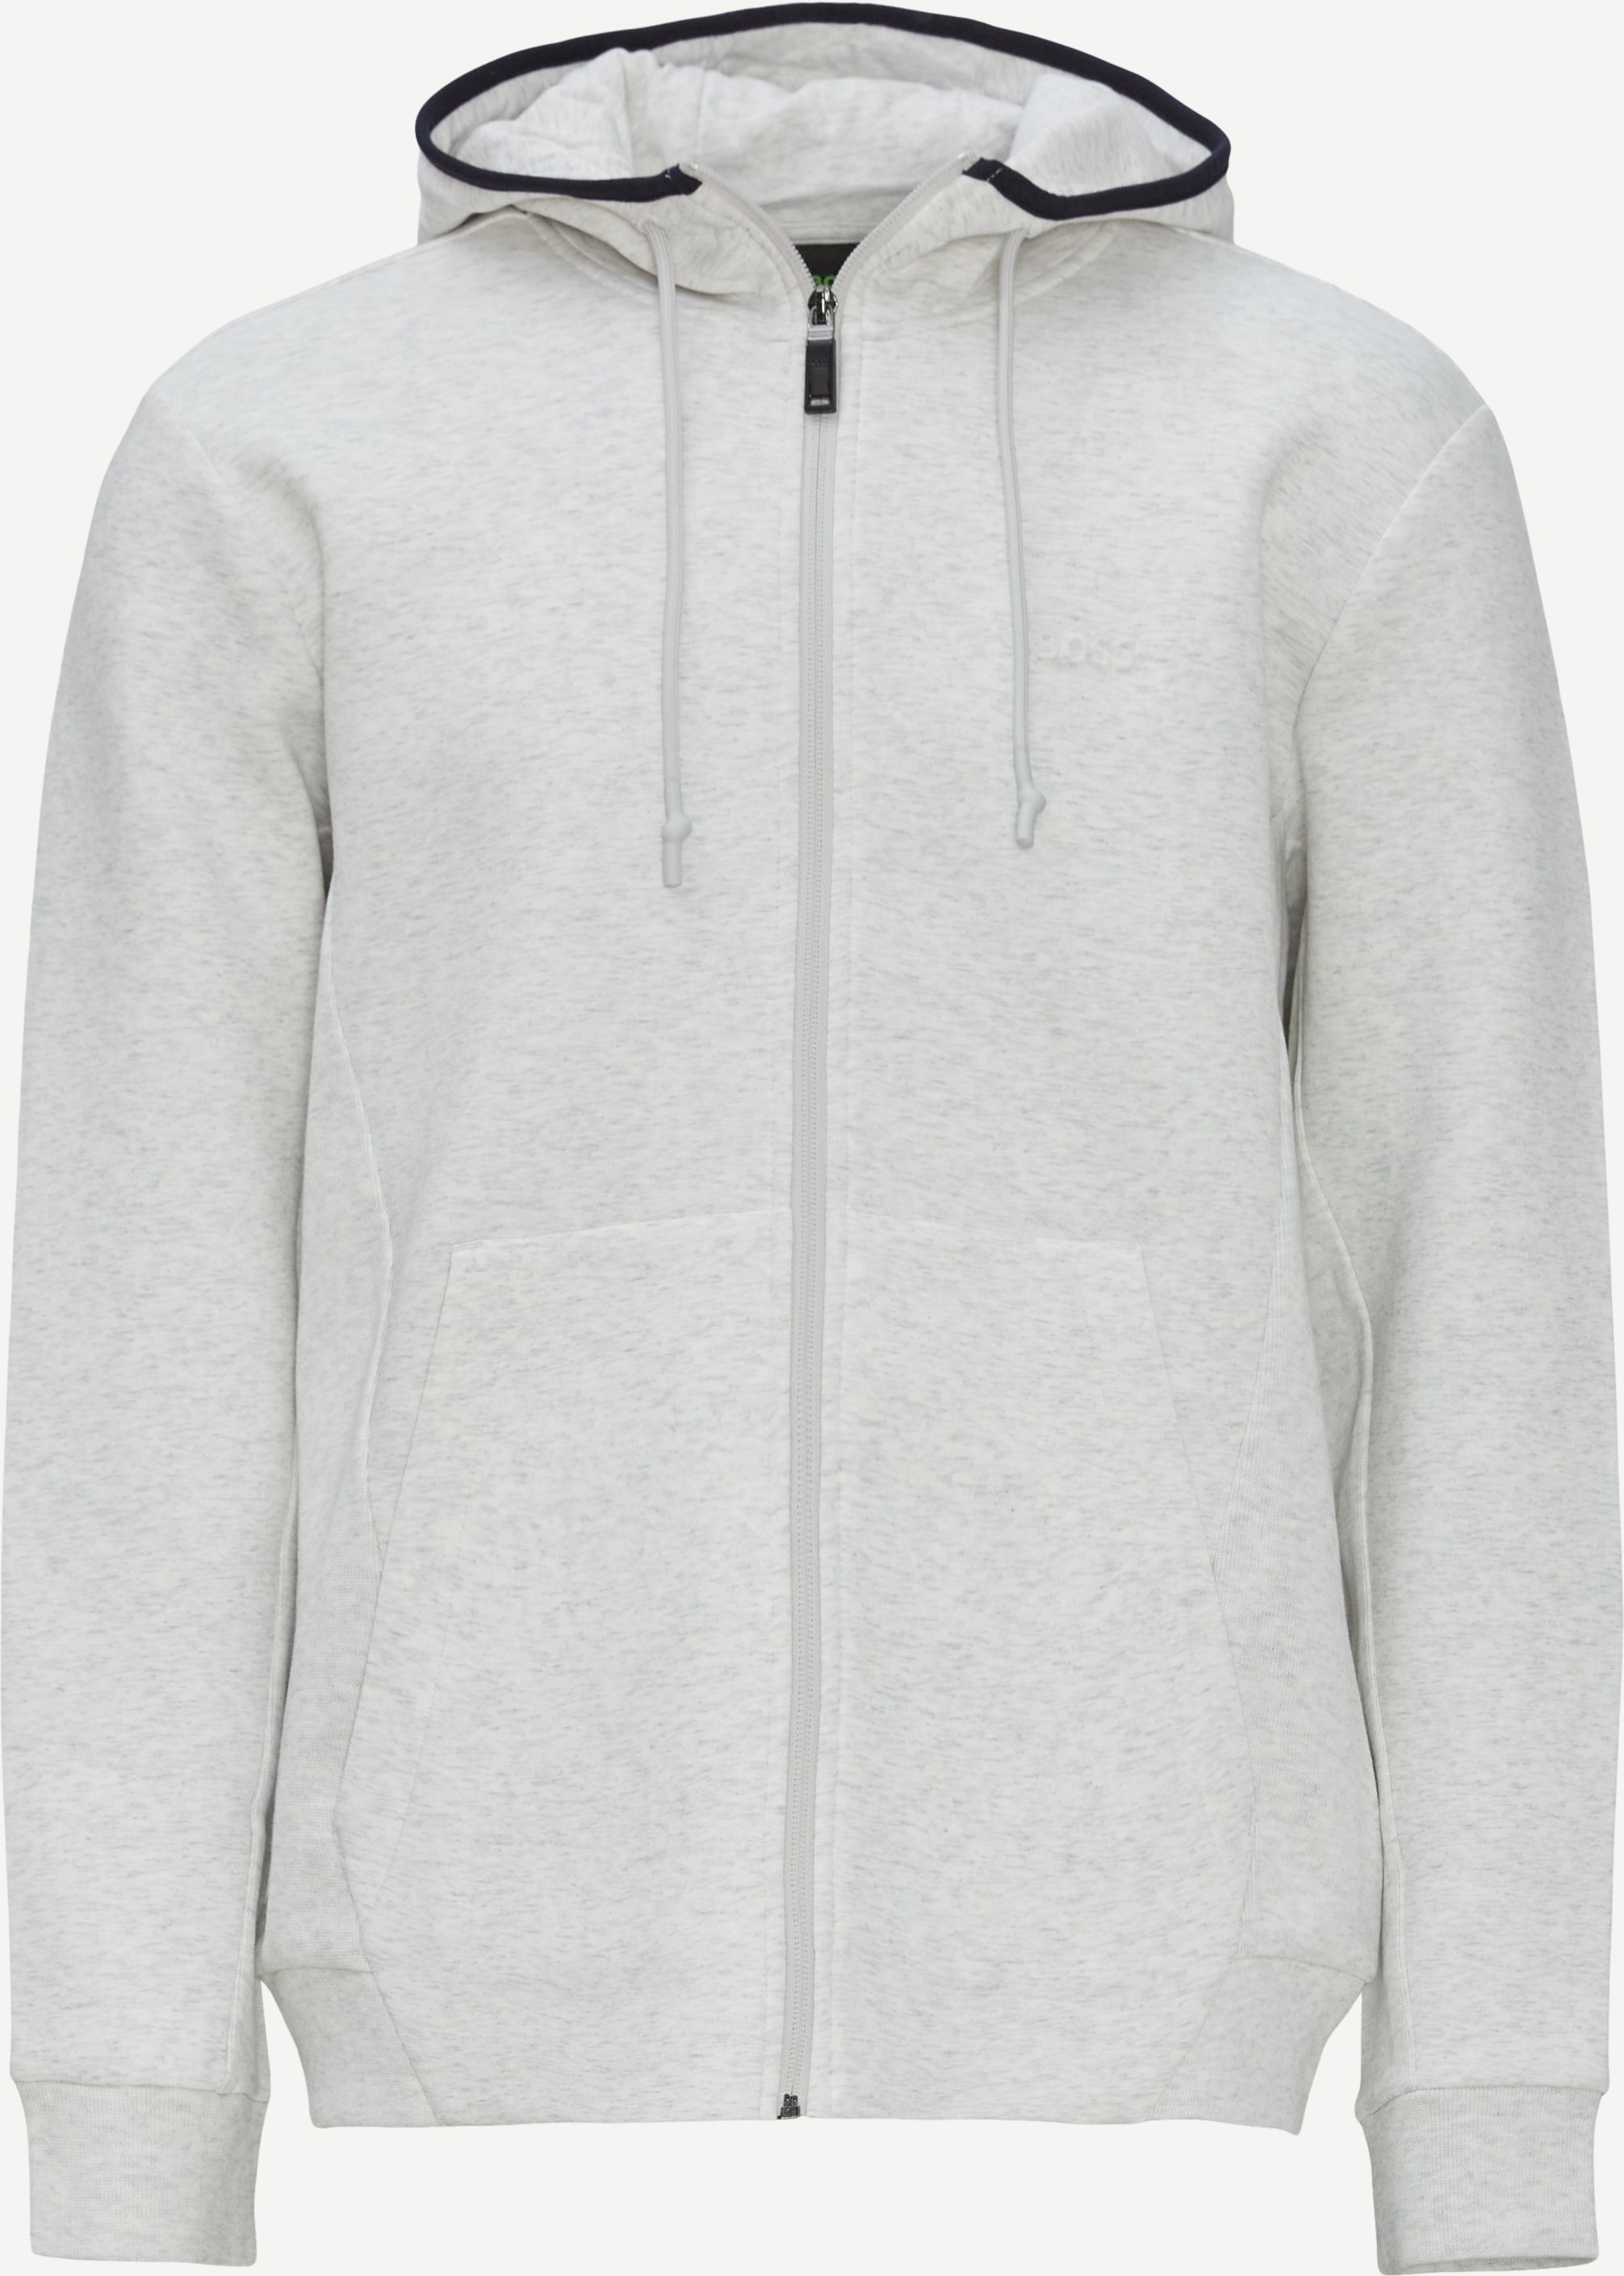 Sgover Hooded Sweatshirt - Sweatshirts - Regular fit - Grå